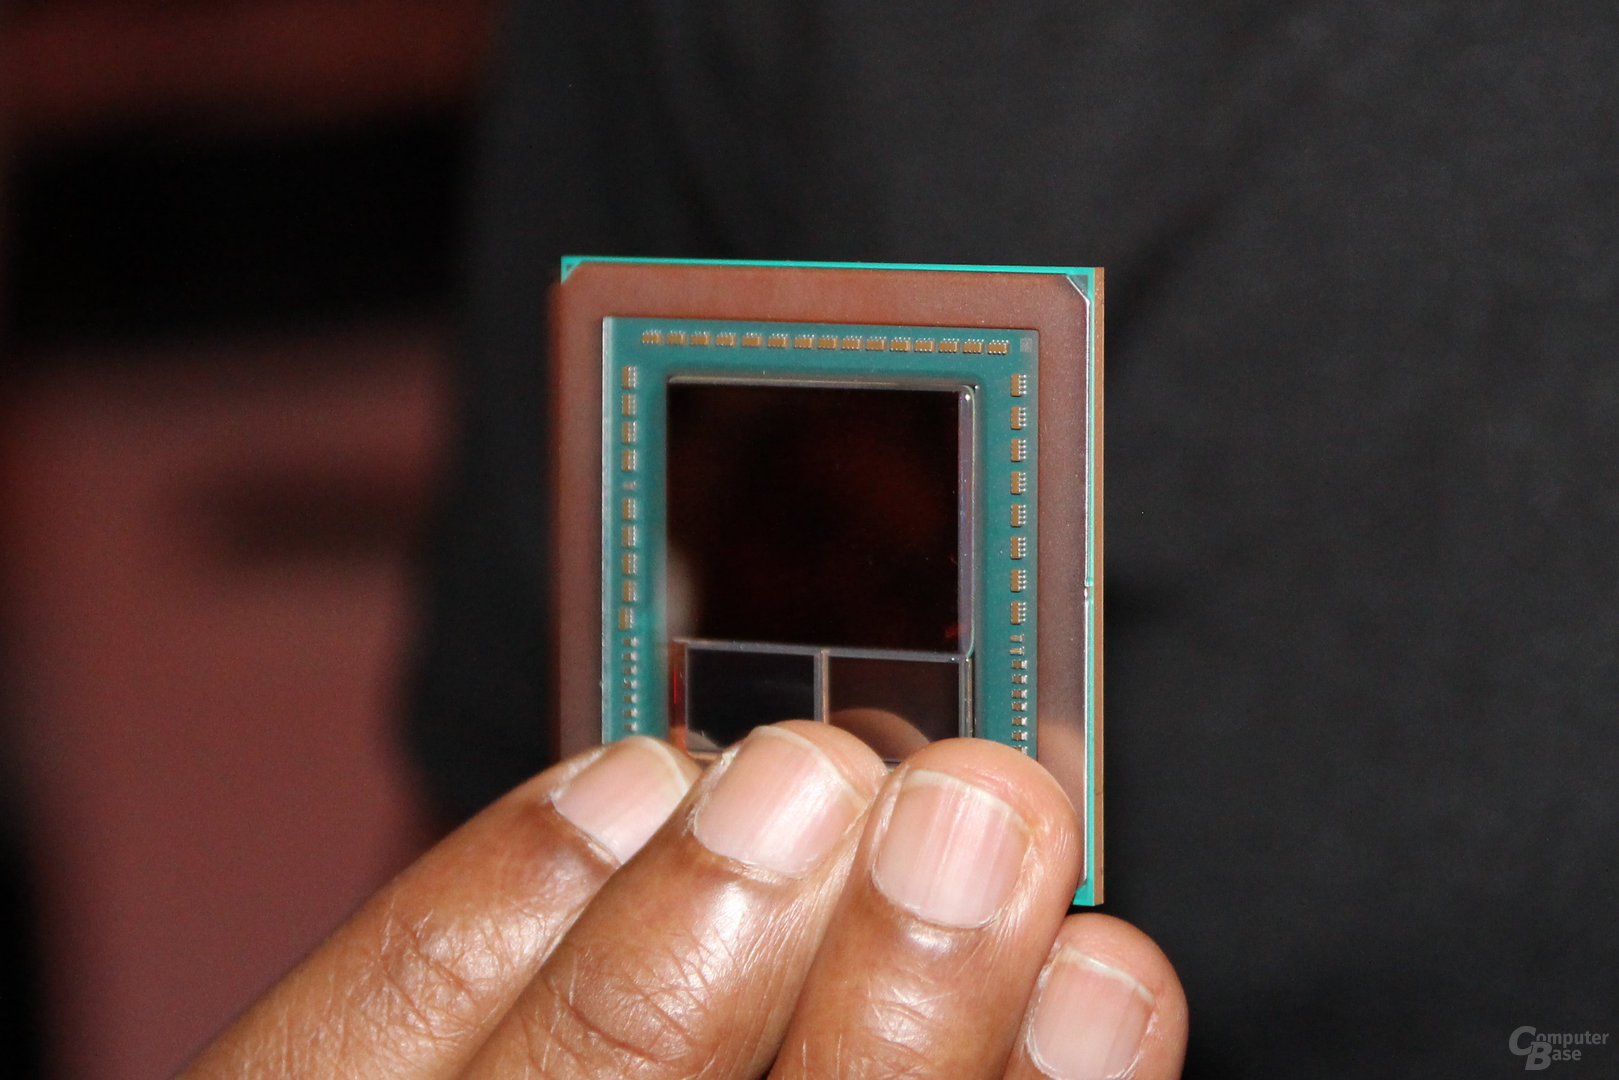 AMD VEGA GPU pictured, features two HBM2 stacks | VideoCardz.com